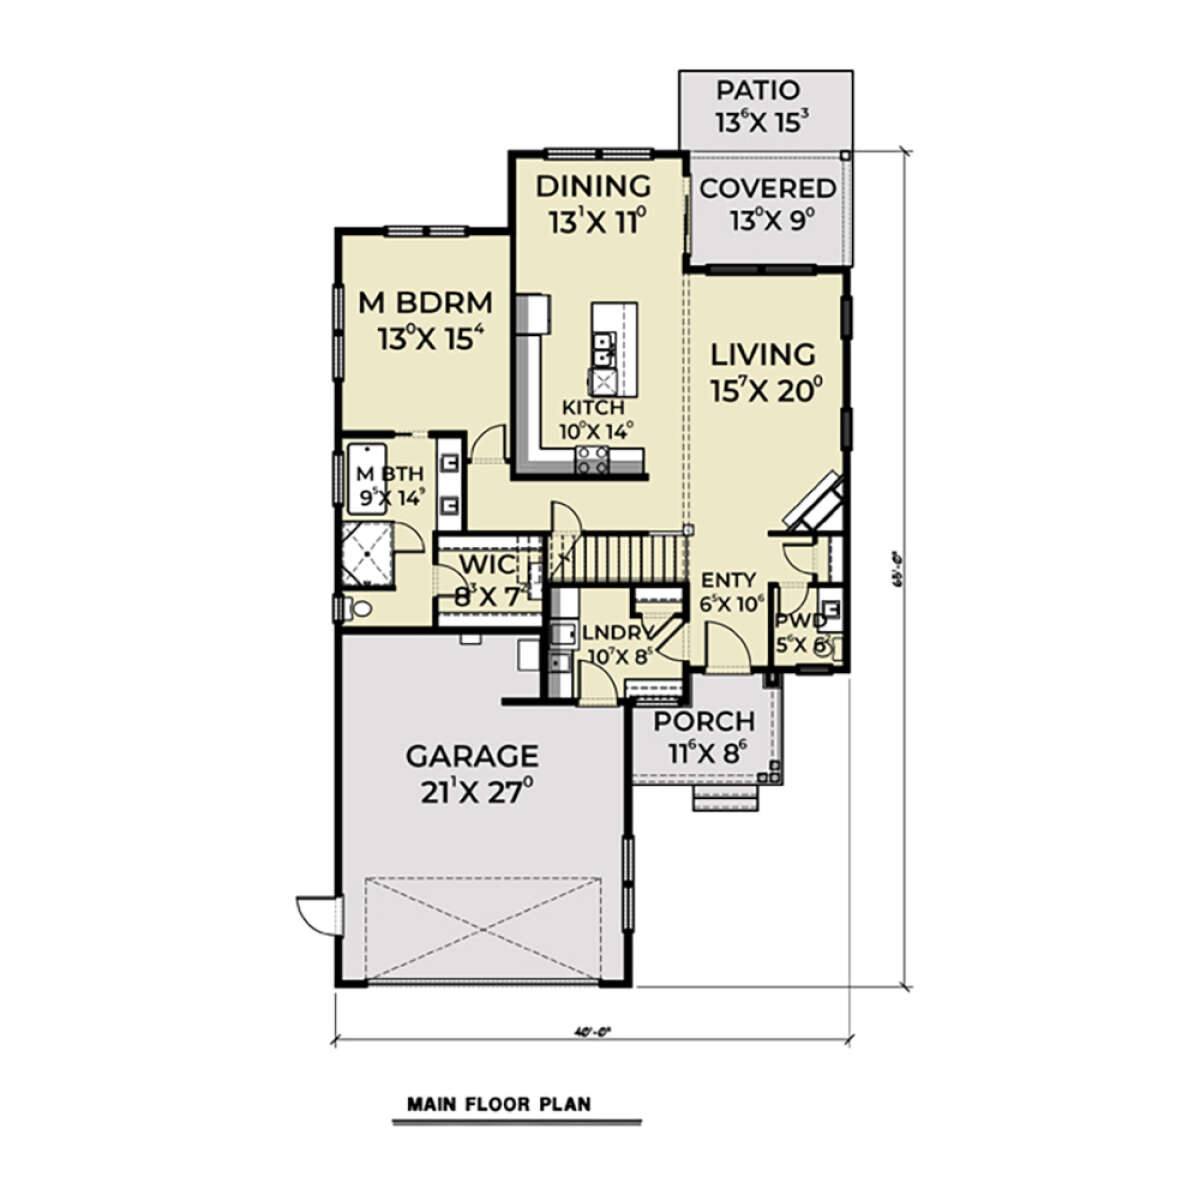 Contemporary Plan: 2,116 Square Feet, 3 Bedrooms, 2.5 Bathrooms - 2464 ...